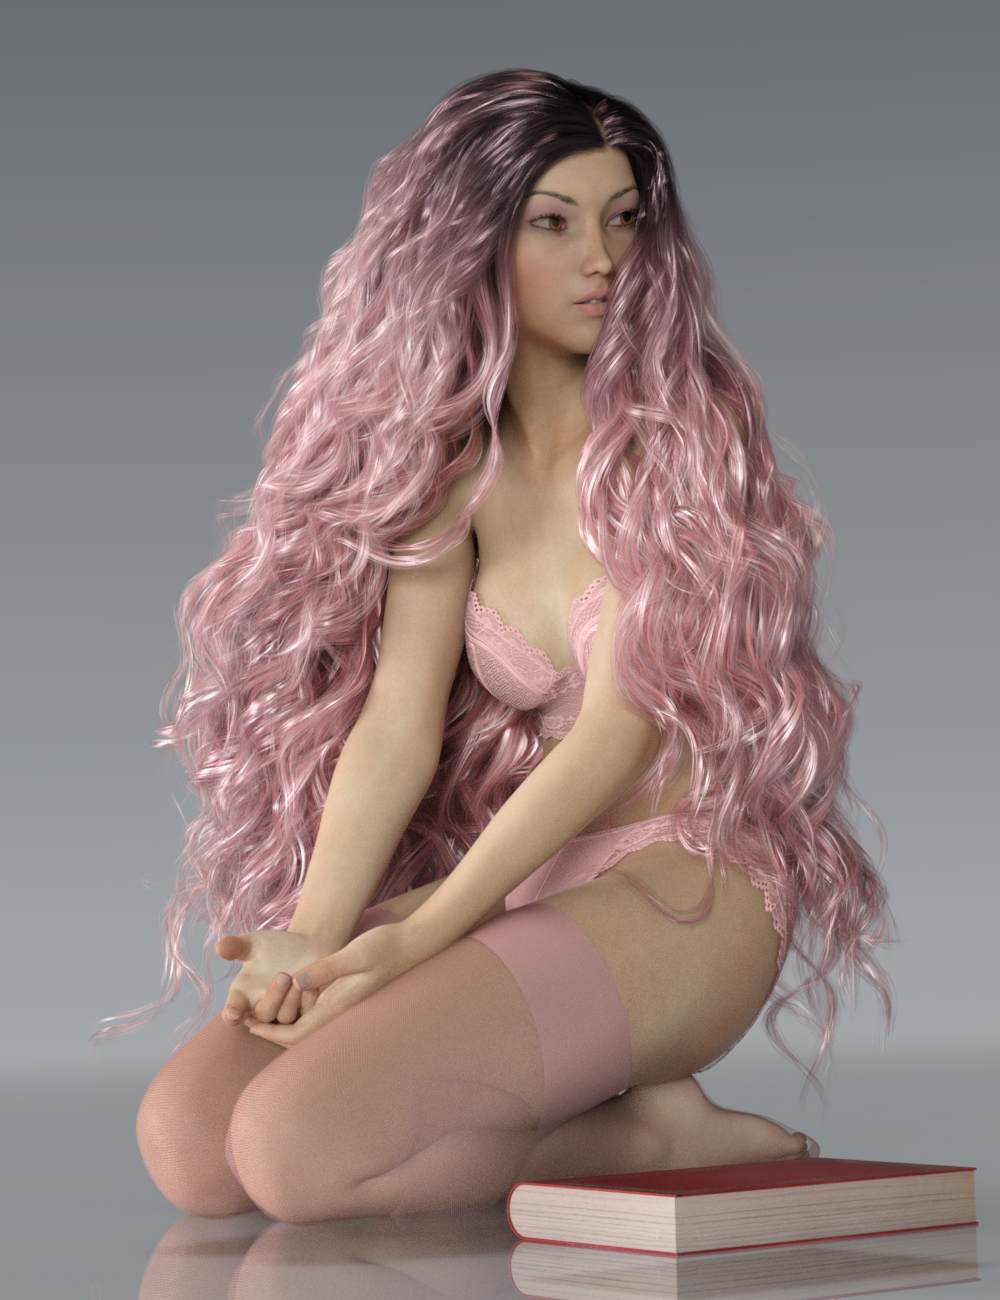 Chiyoko for Genesis 8 Female by: Warloc, 3D Models by Daz 3D